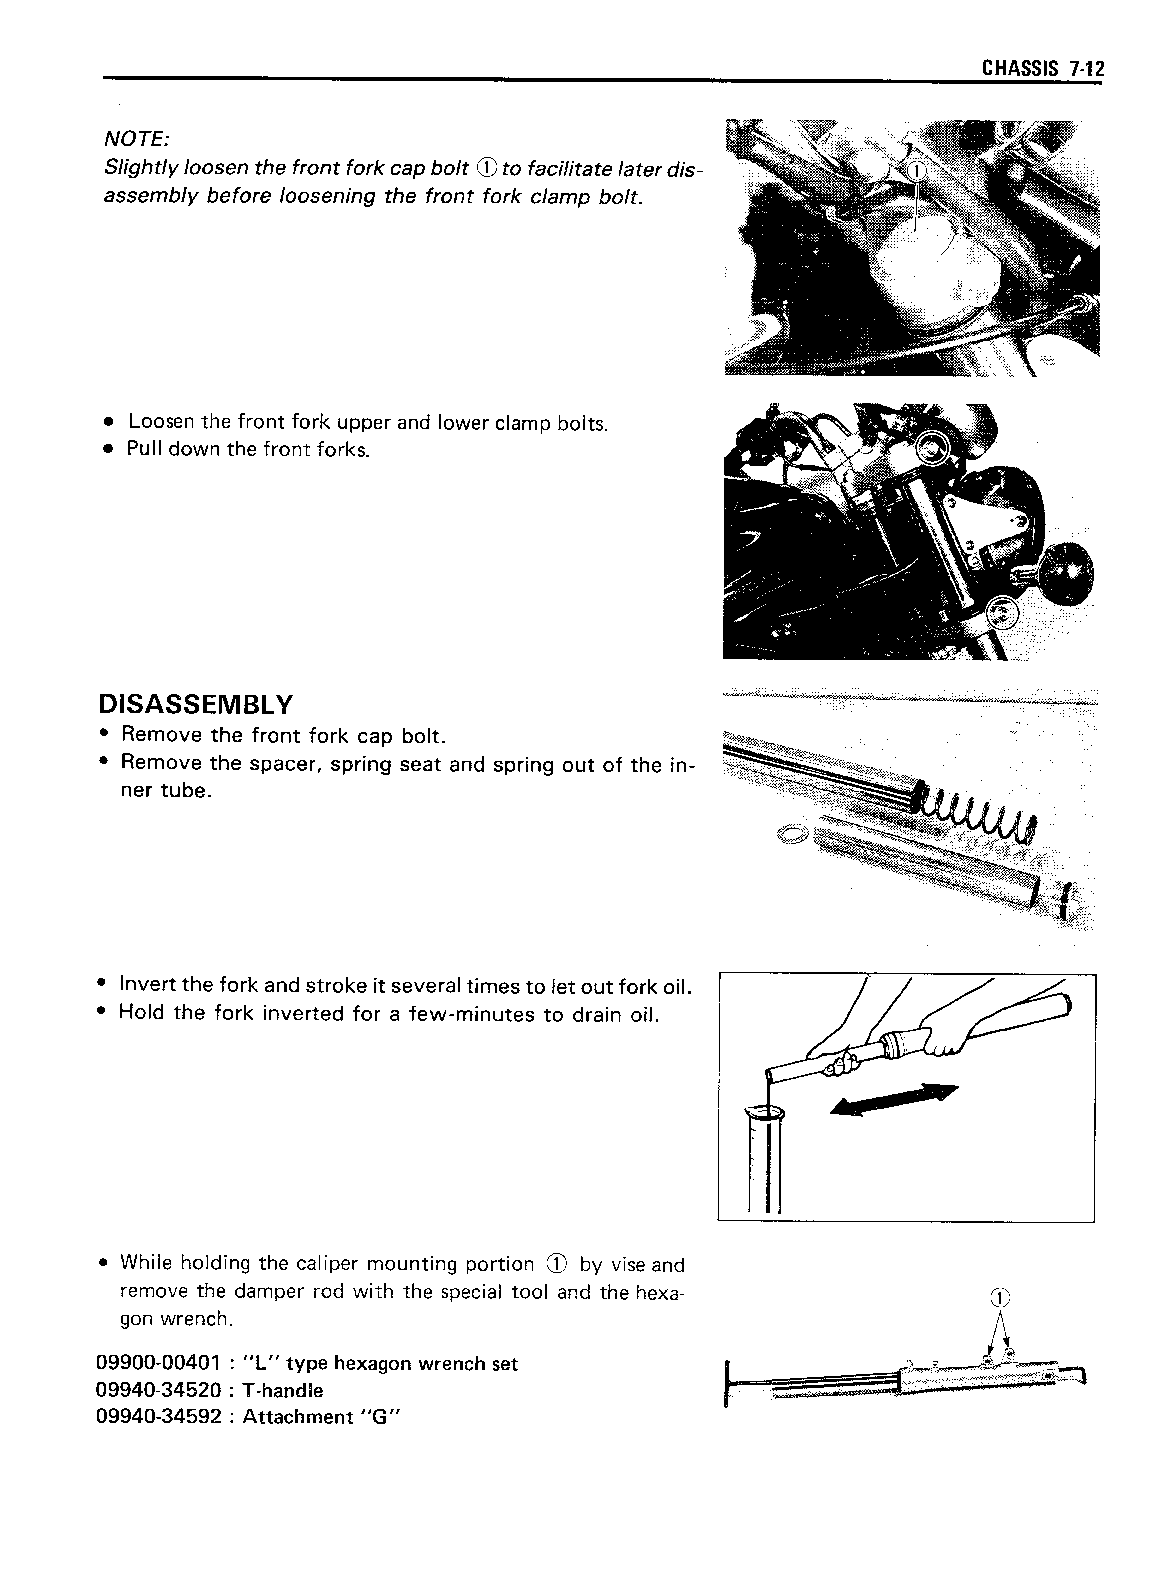 1991-1997 Suzuki GSF400 Bandido Manual